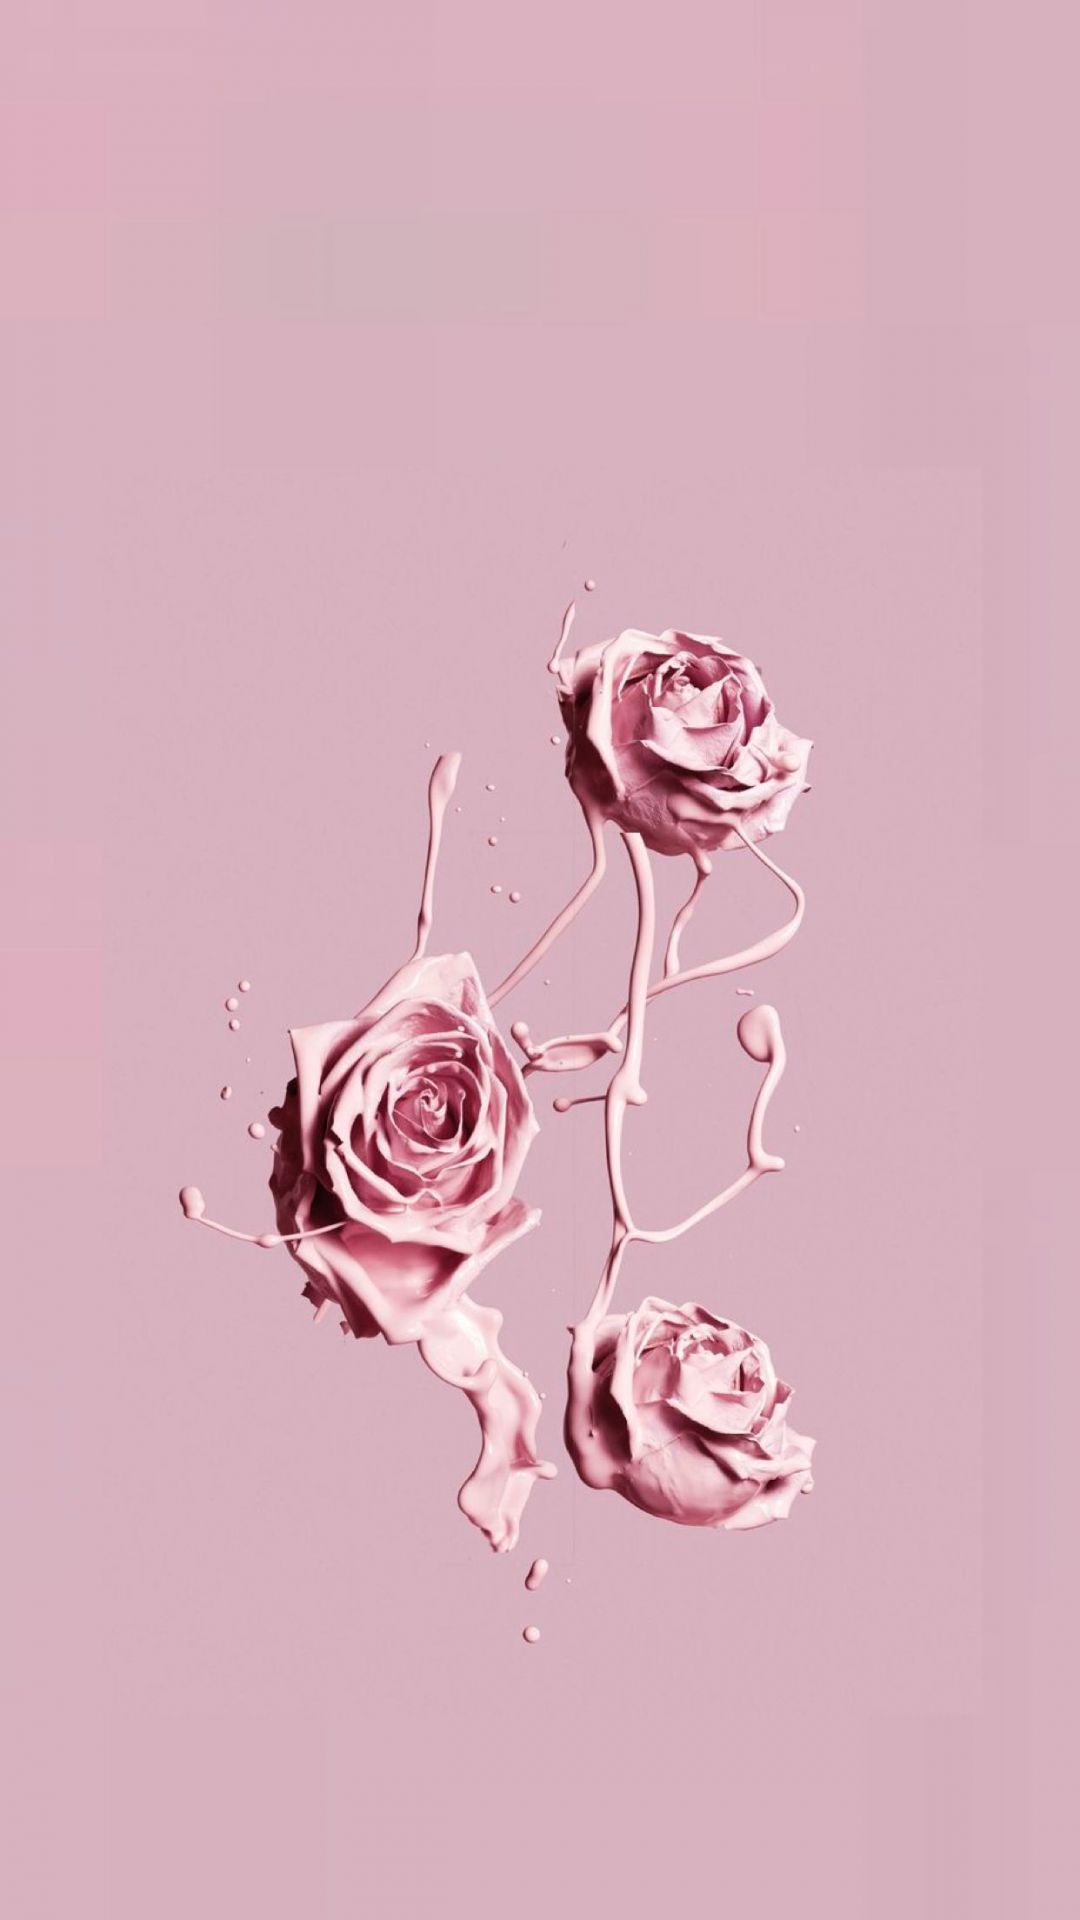 fond d'écran rose iphone,rose,roses de jardin,rose,illustration,fleur